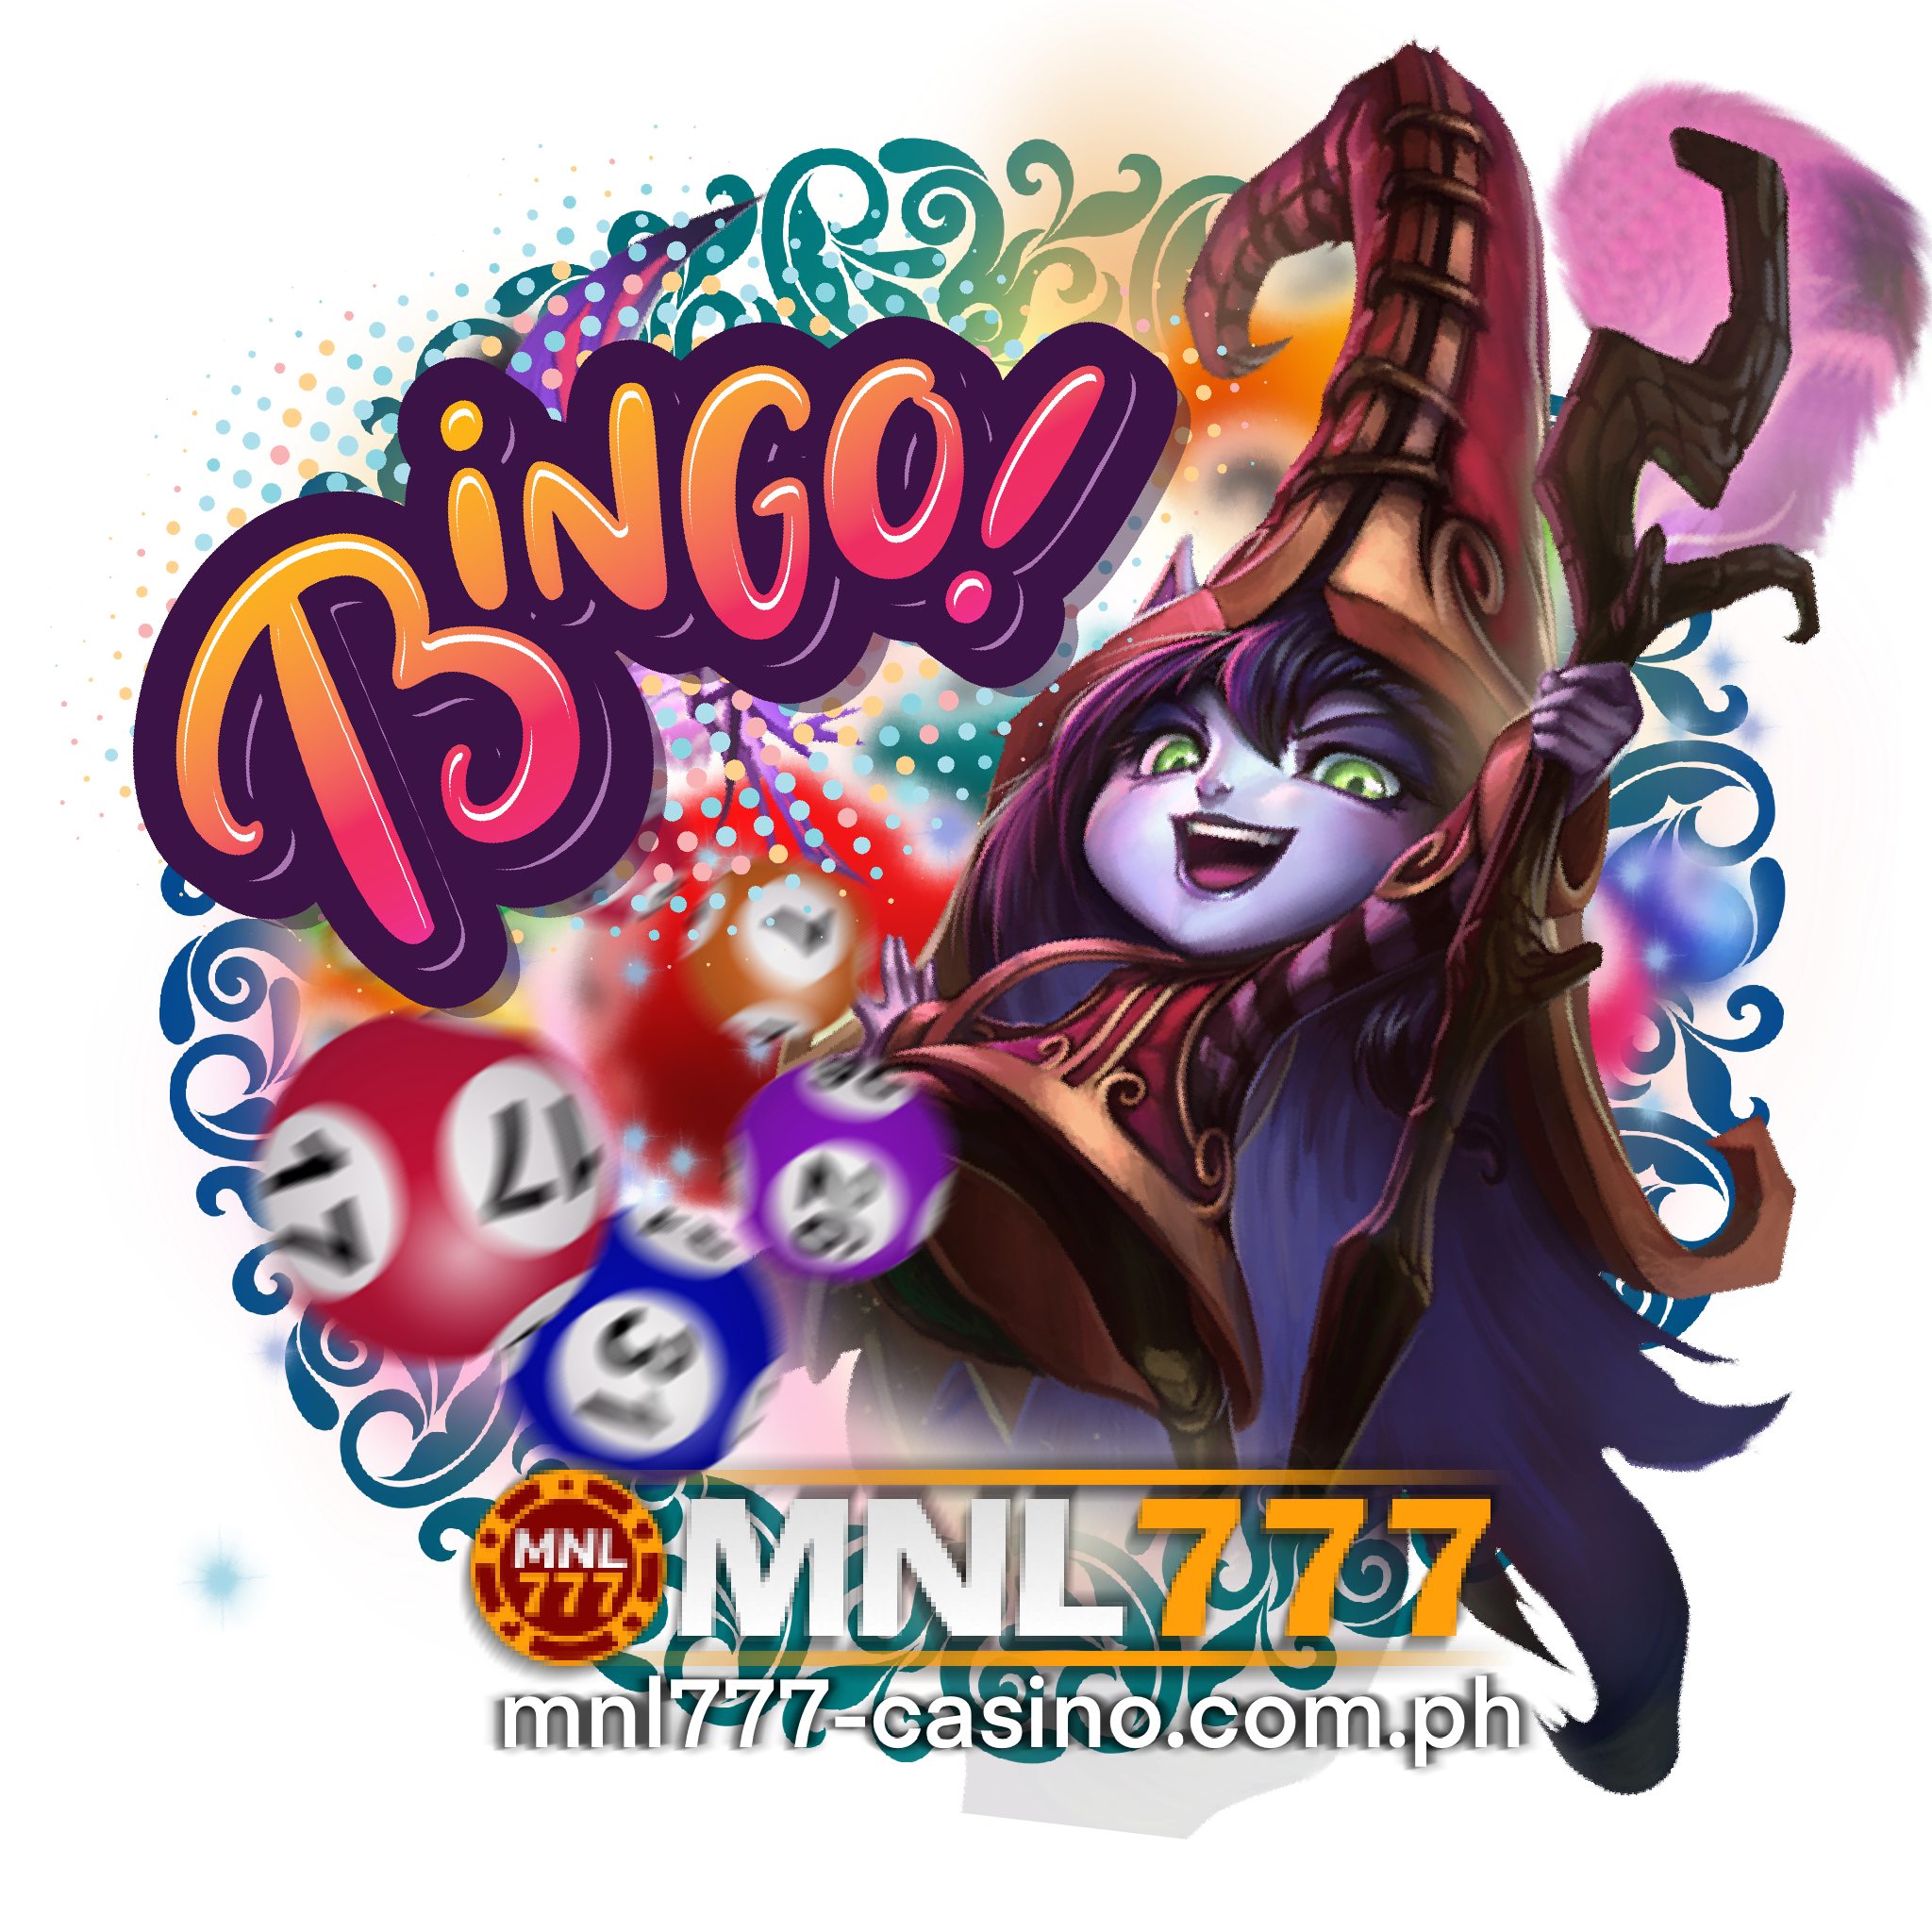 MNL777 bingo